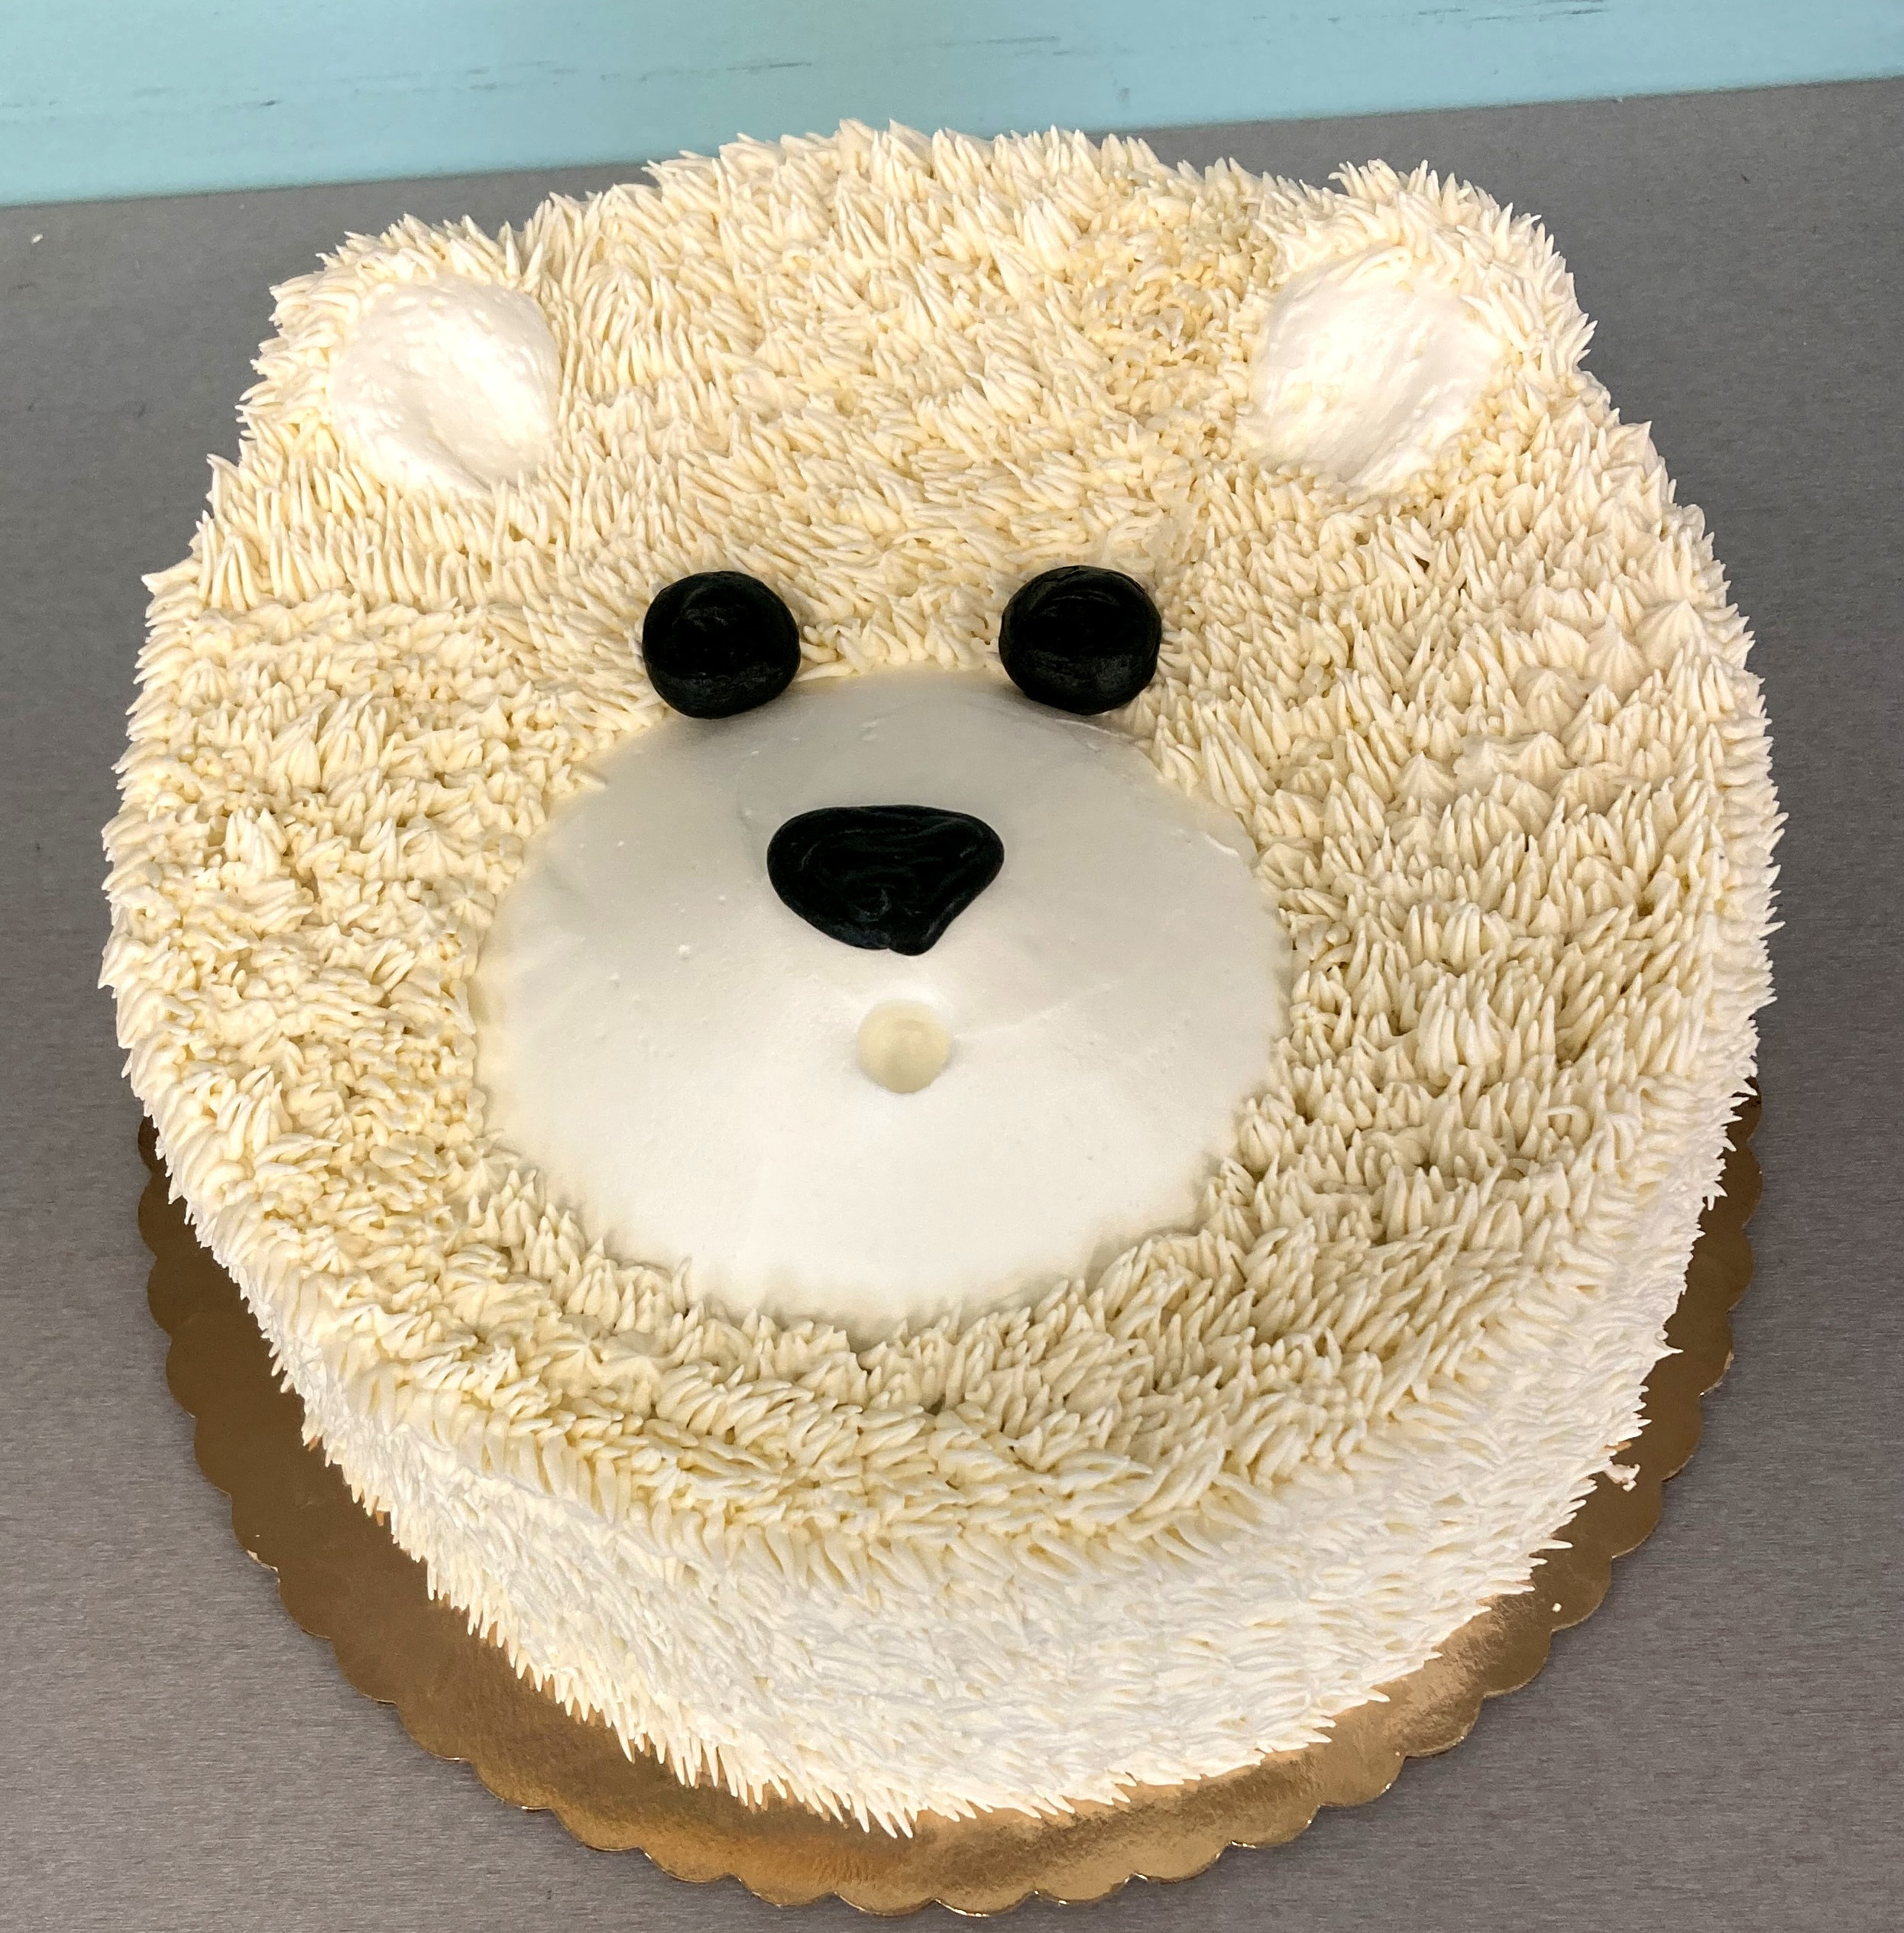 Teddy bear decorated cake